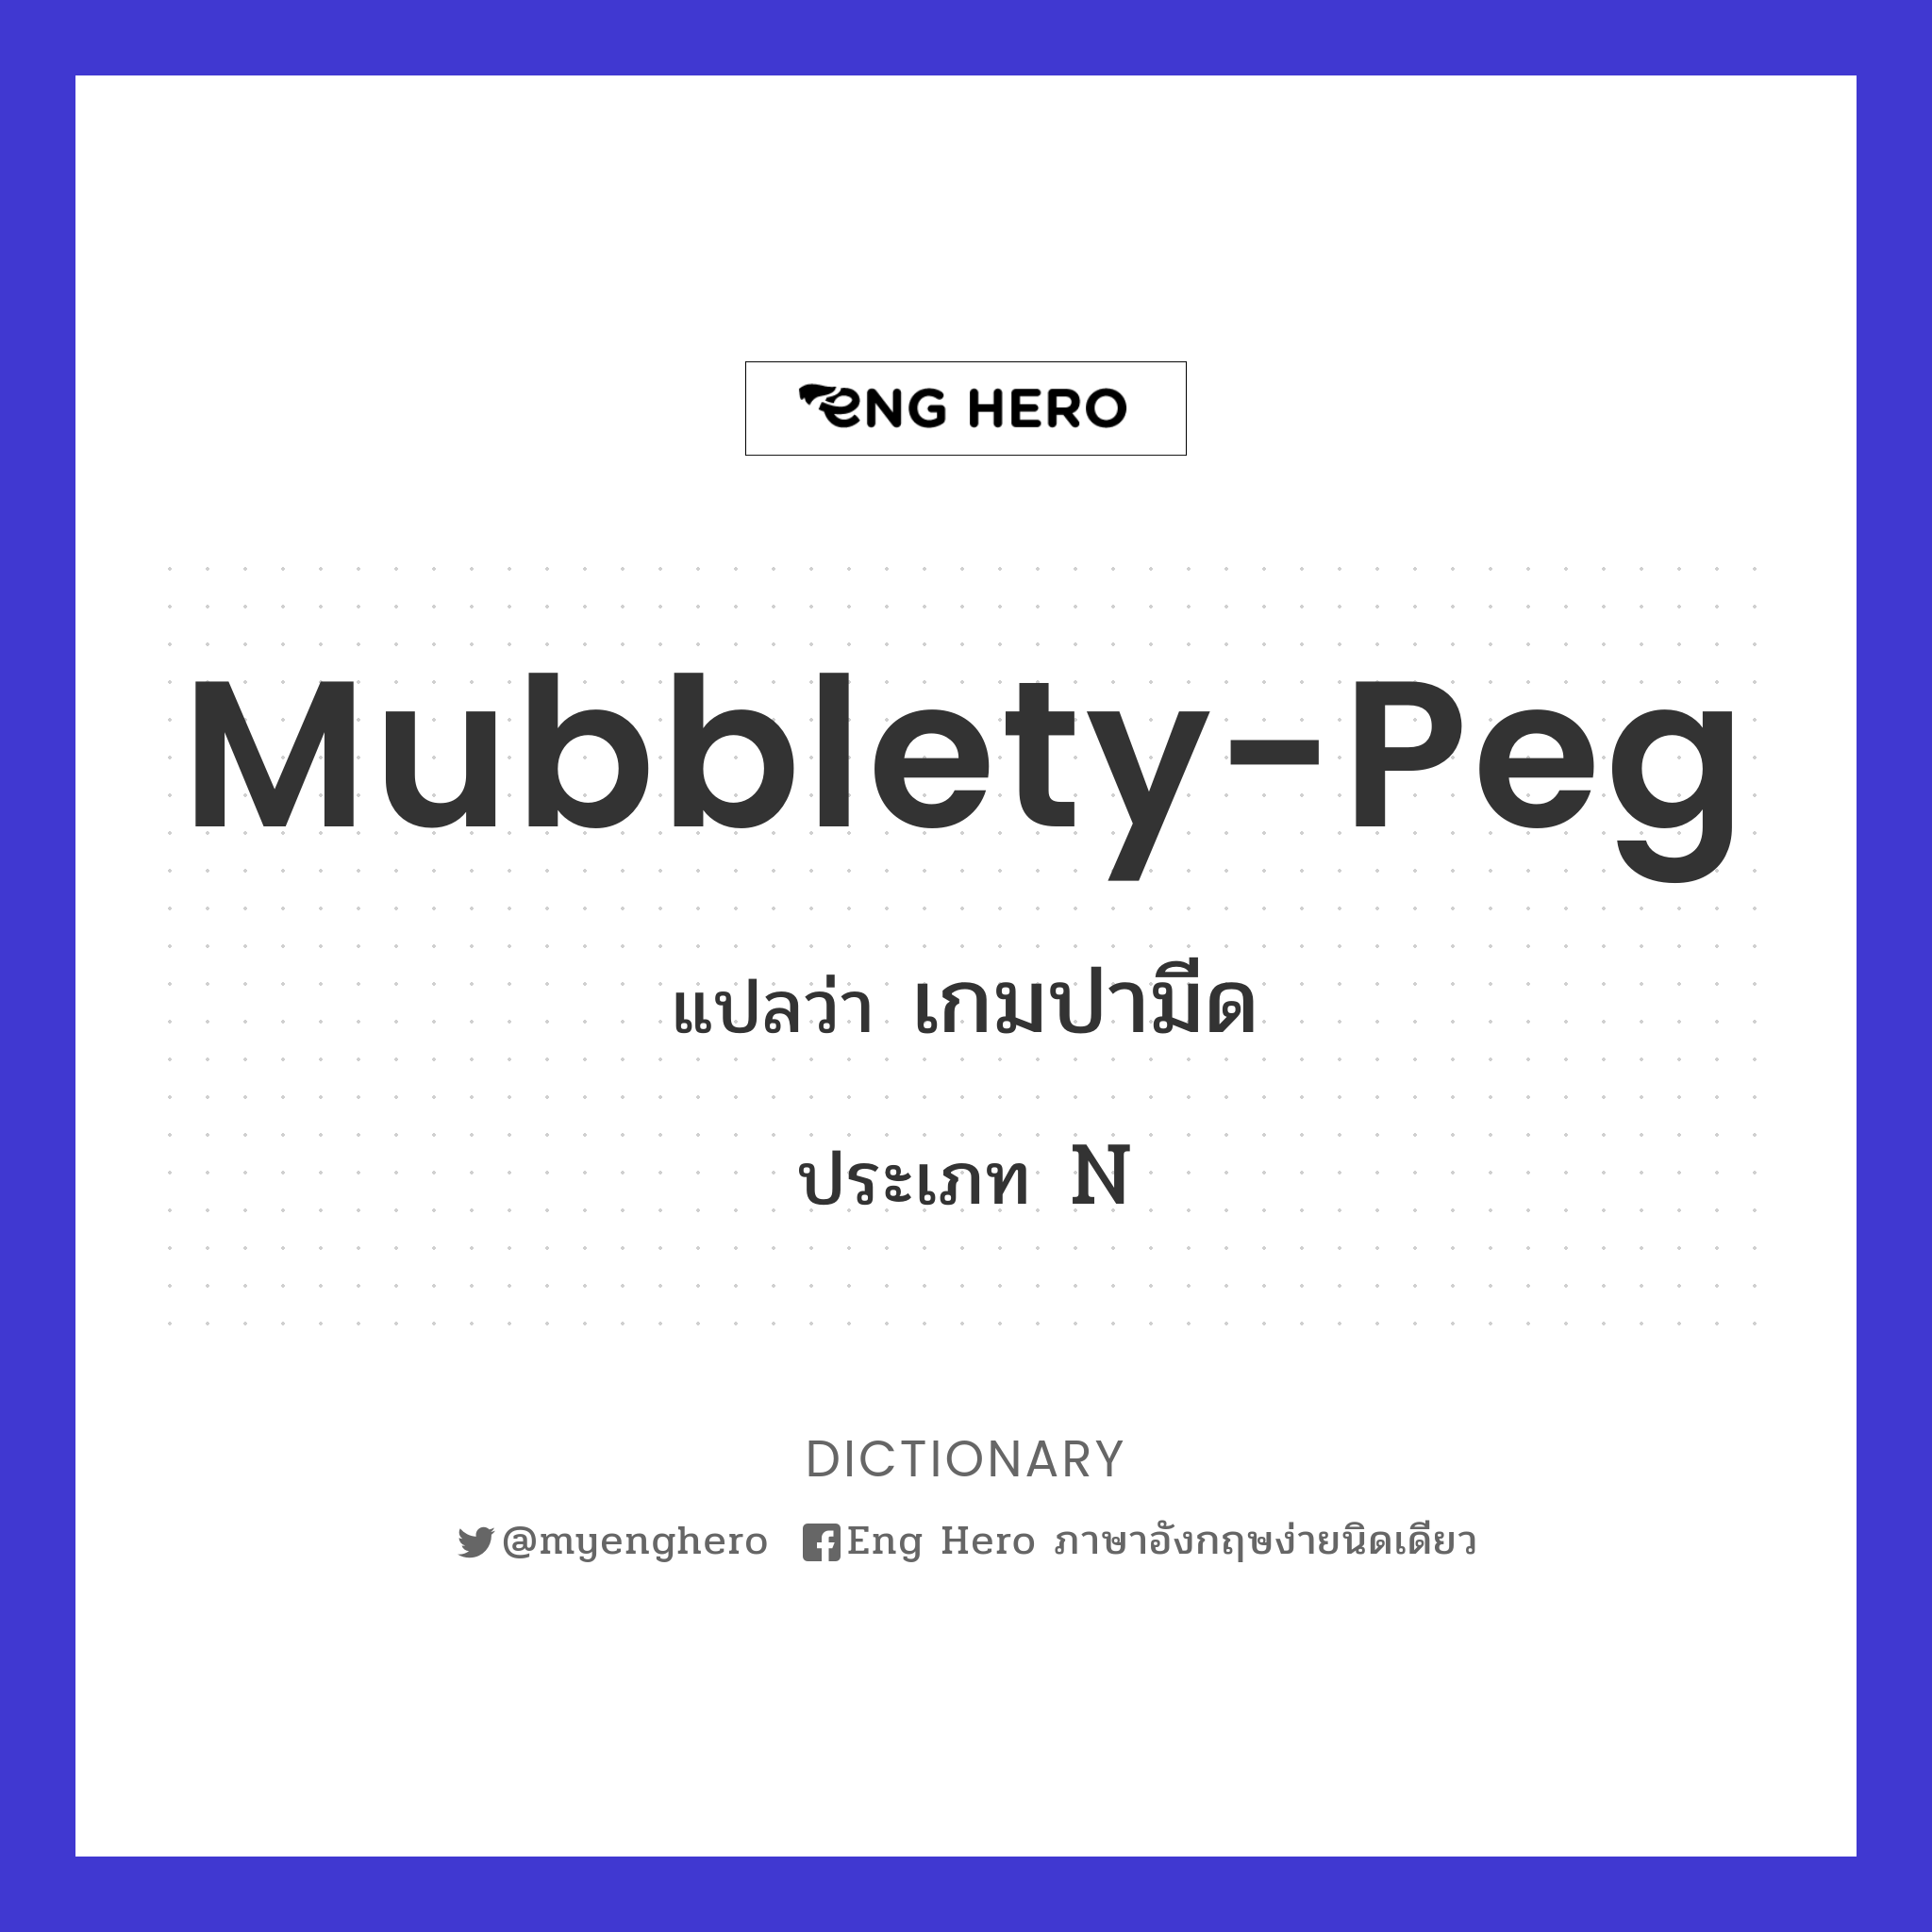 mubblety-peg